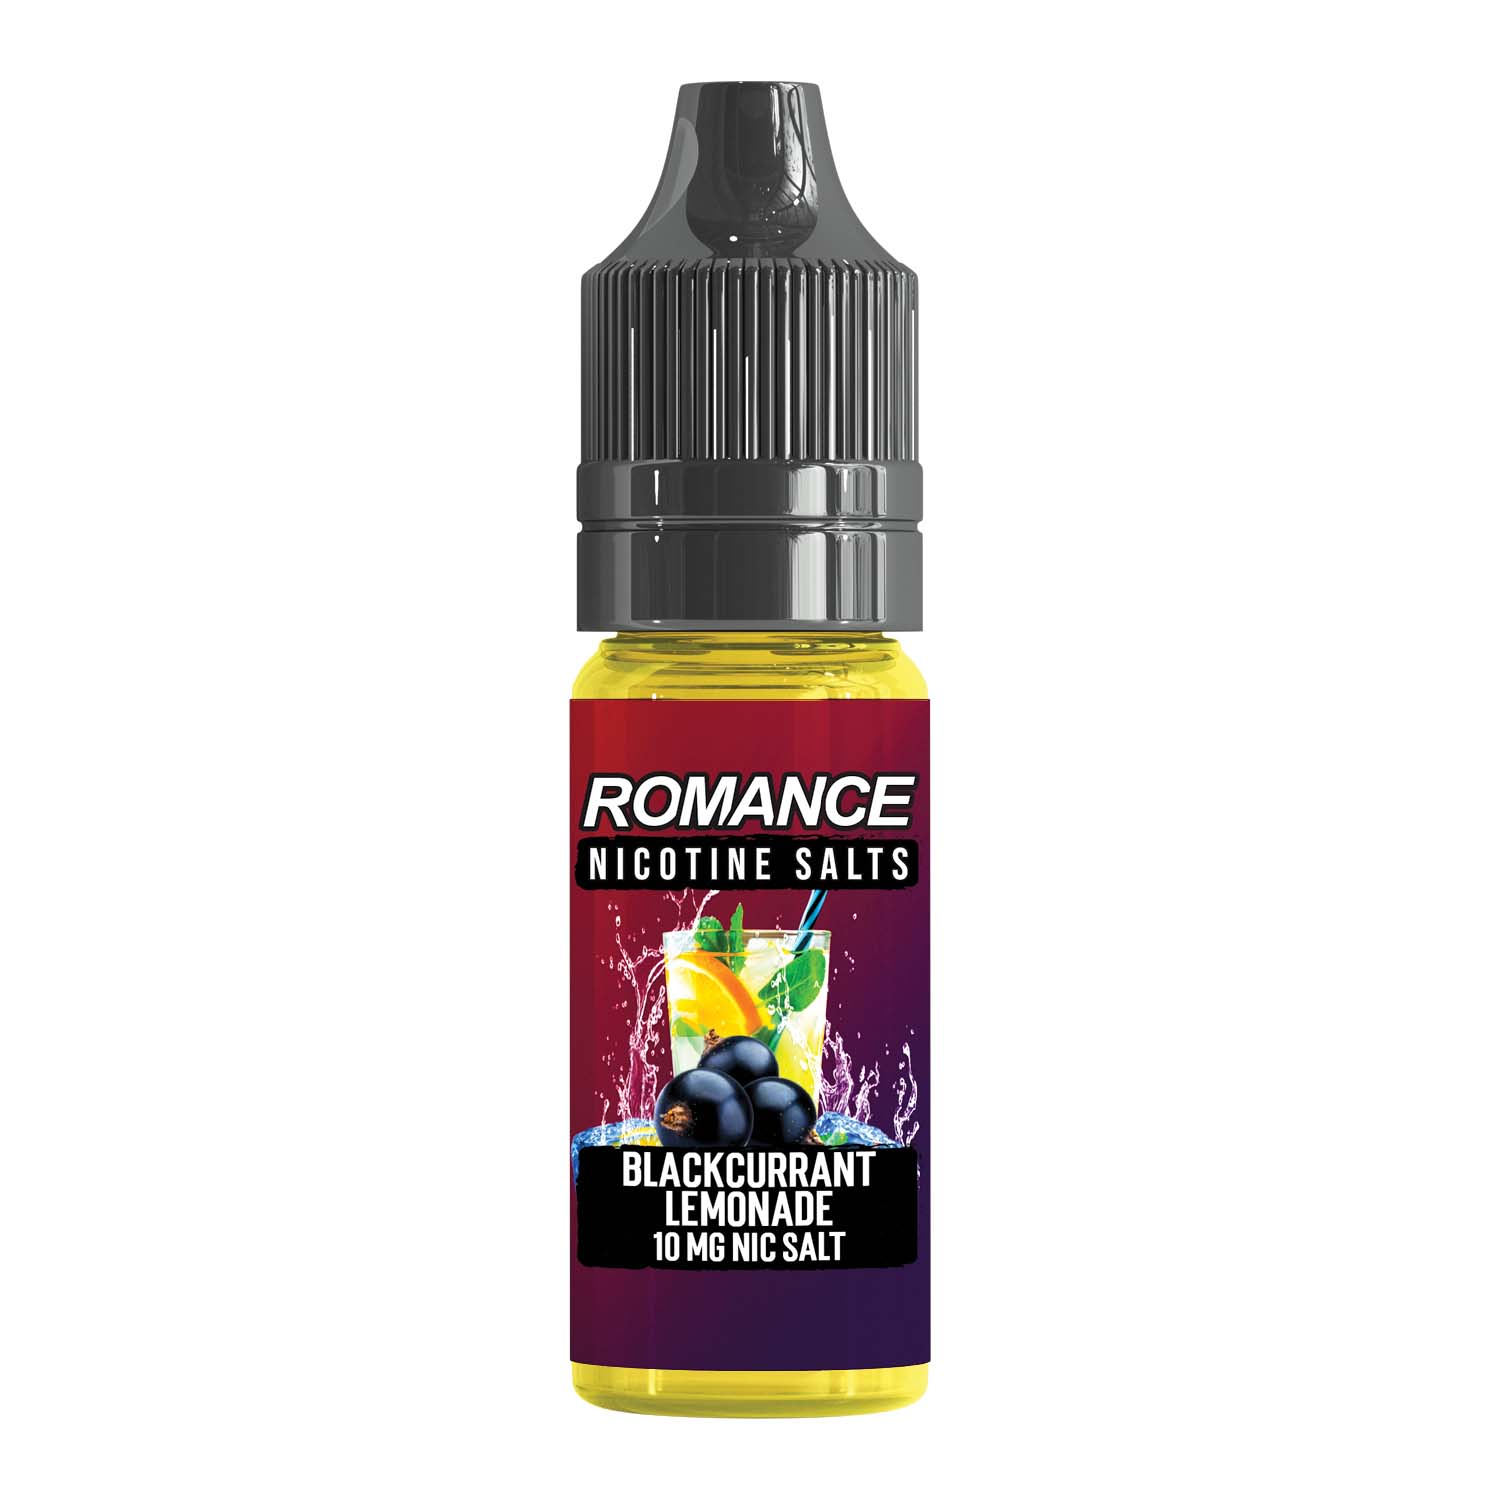  Romance Blackcurrant Lemonade Nicotine Salts 10ml